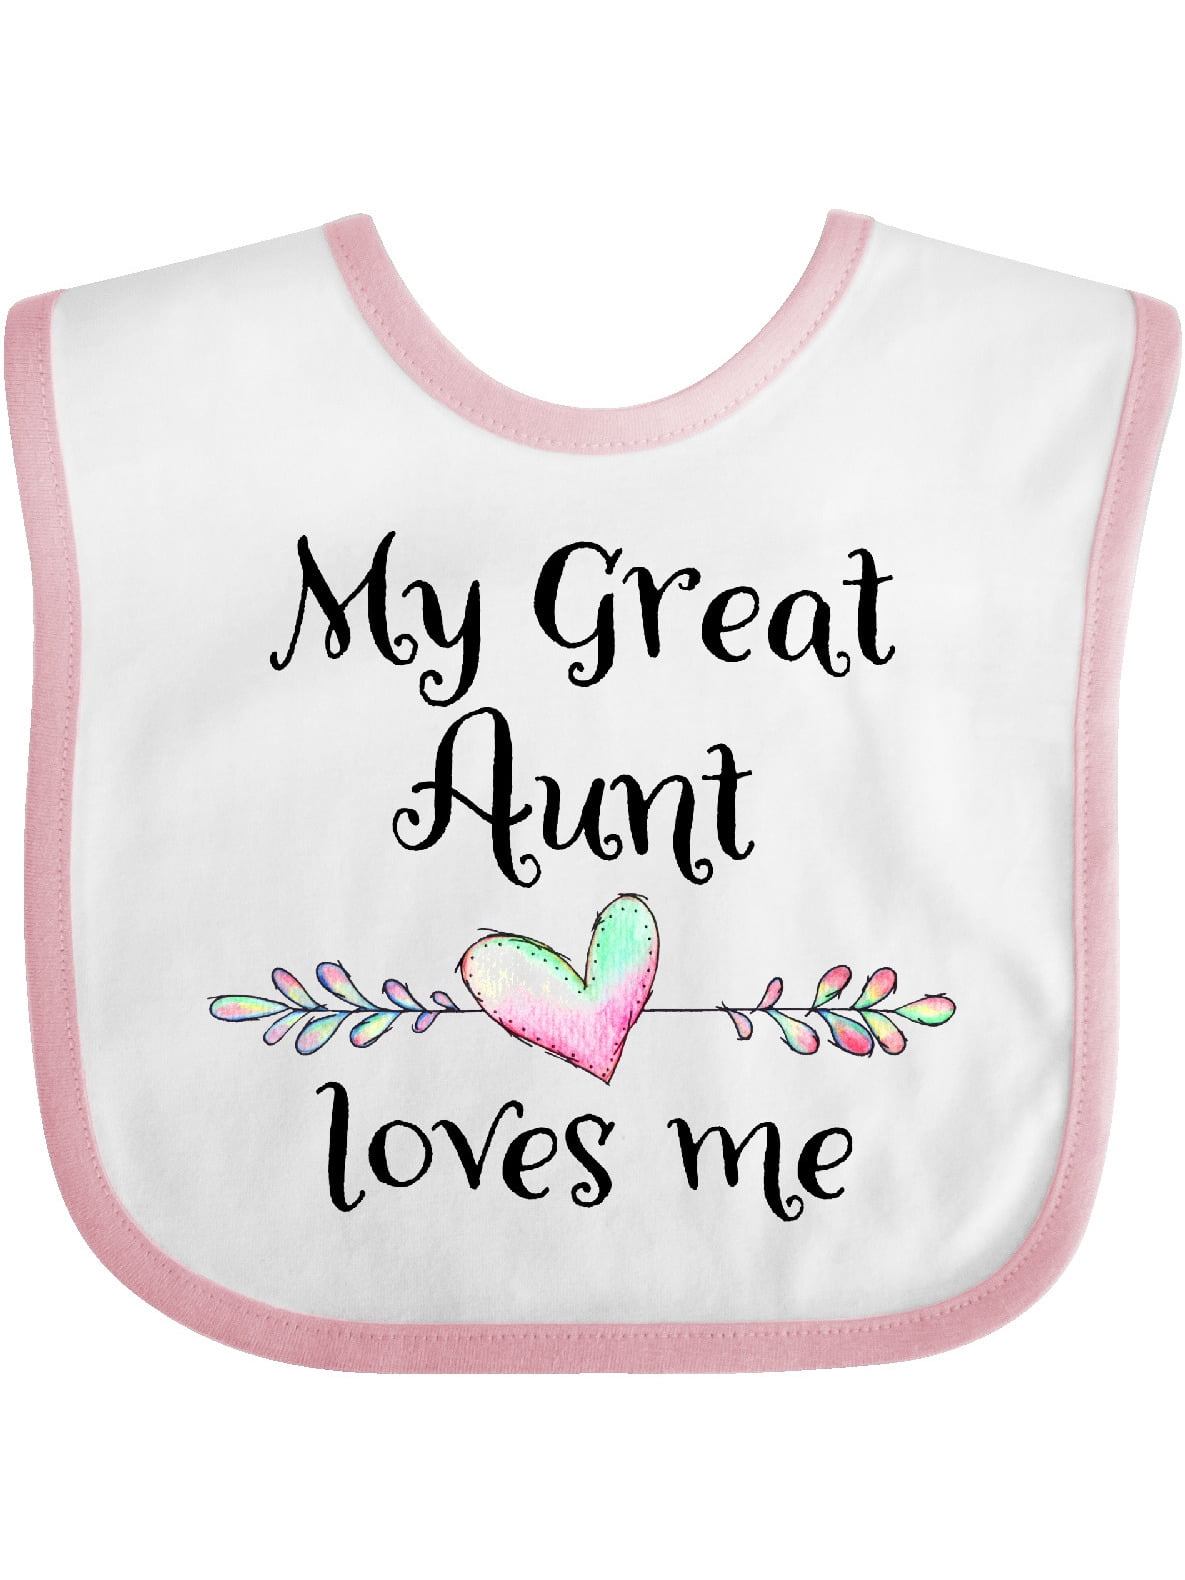 My Great Aunt Loves Me- Heart Baby Bib - Walmart.com - Walmart.com